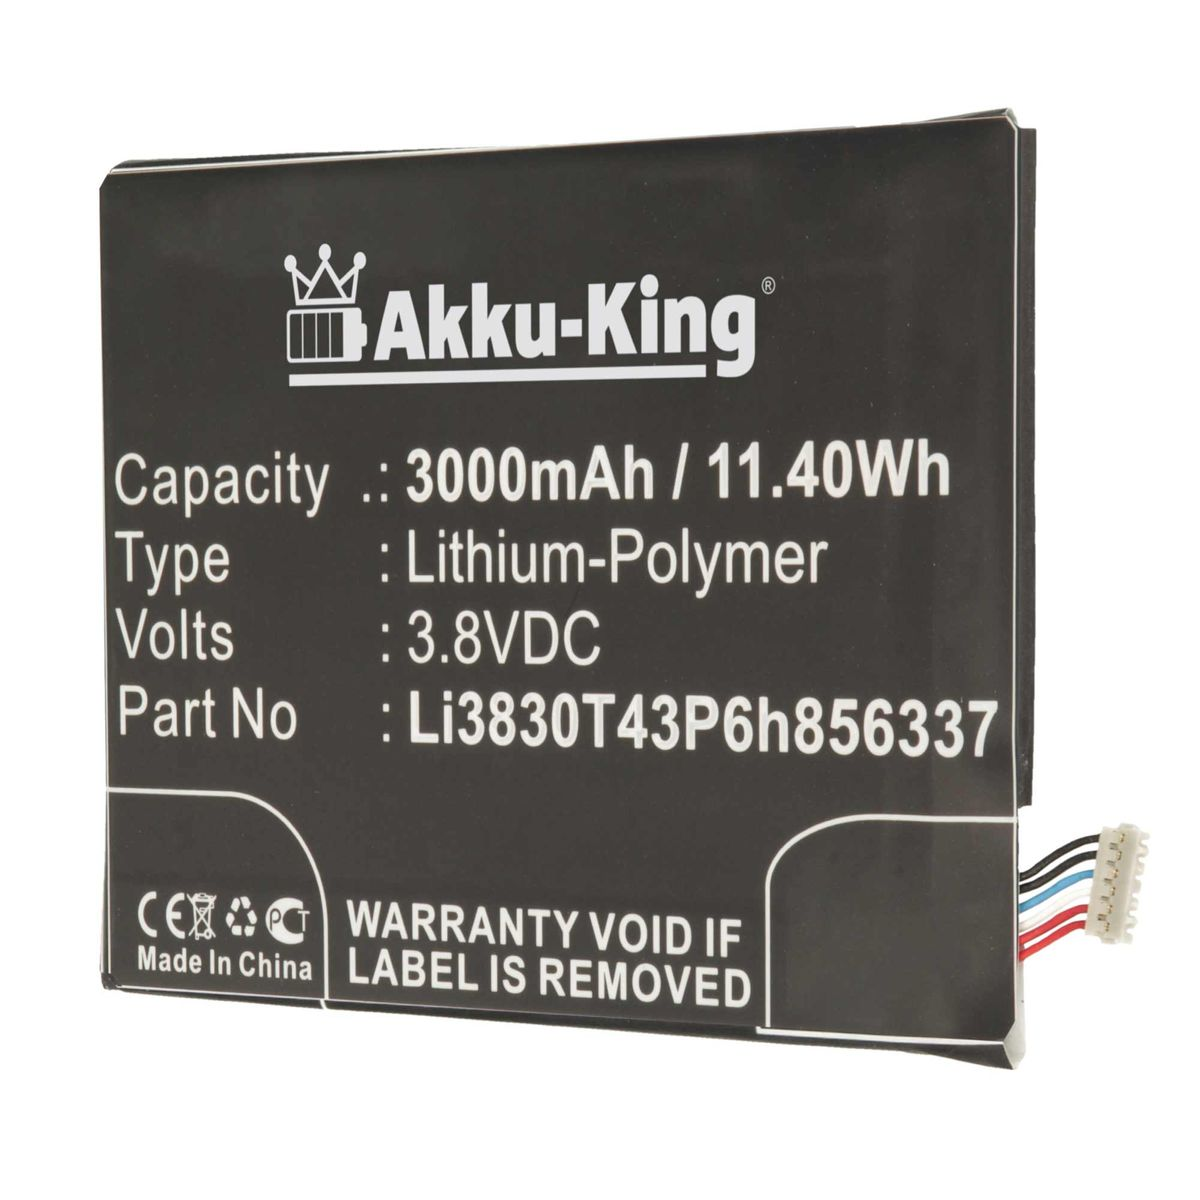 AKKU-KING Akku für Li3830T43P6h856337 3.8 Volt, 3000mAh Li-Polymer BlackBerry Handy-Akku